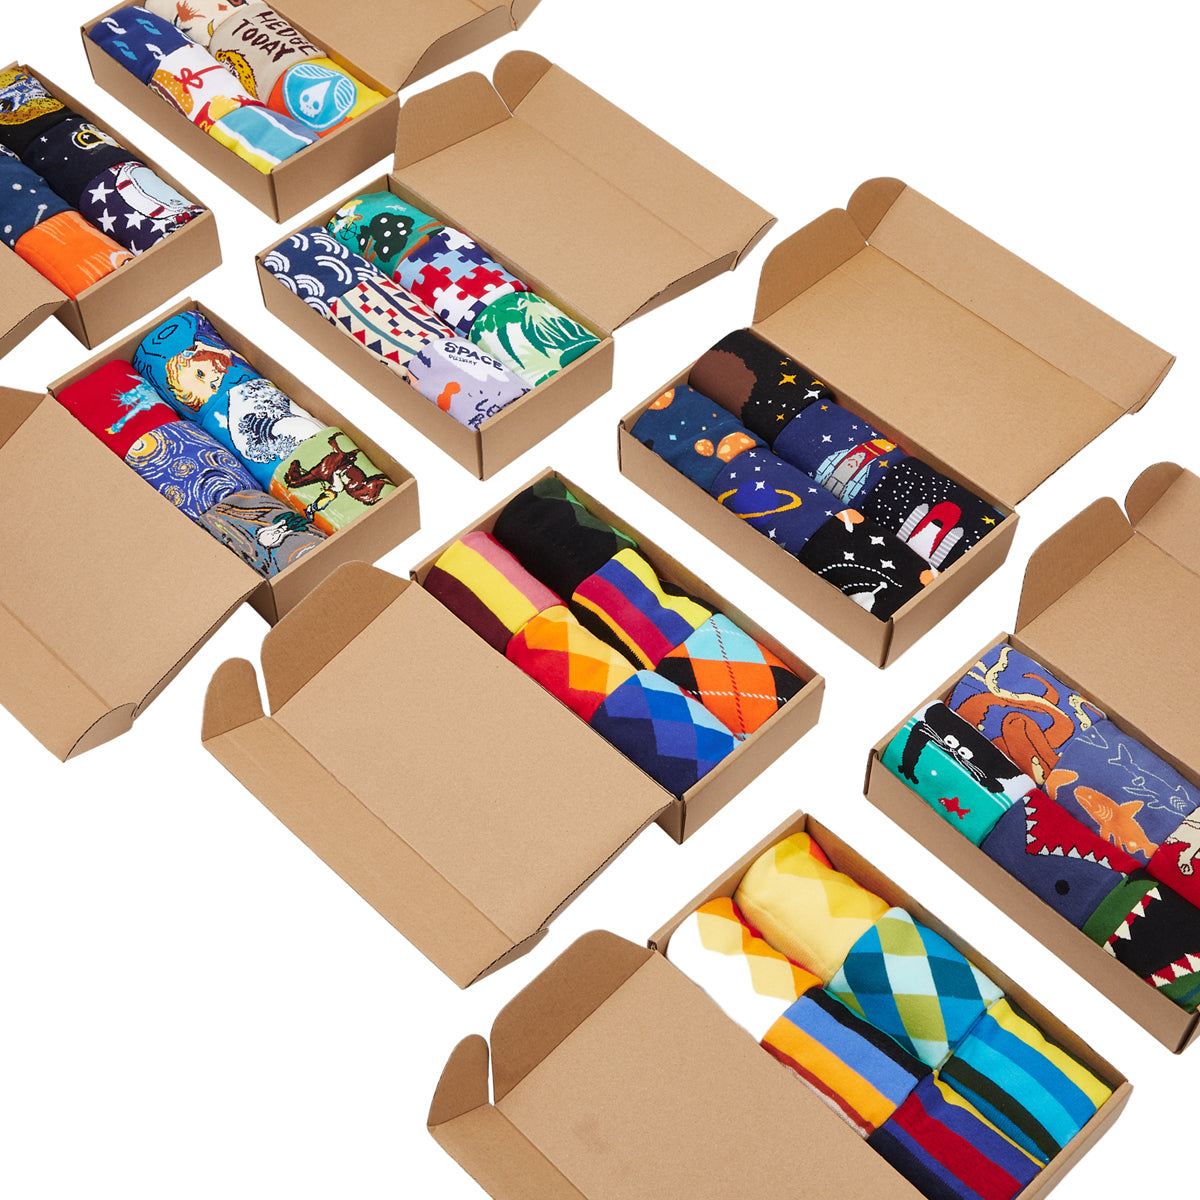 IDENTITY - Daily Grind Box of Socks Gift Set - 6 Pairs - IDENTITY Apparel Shop